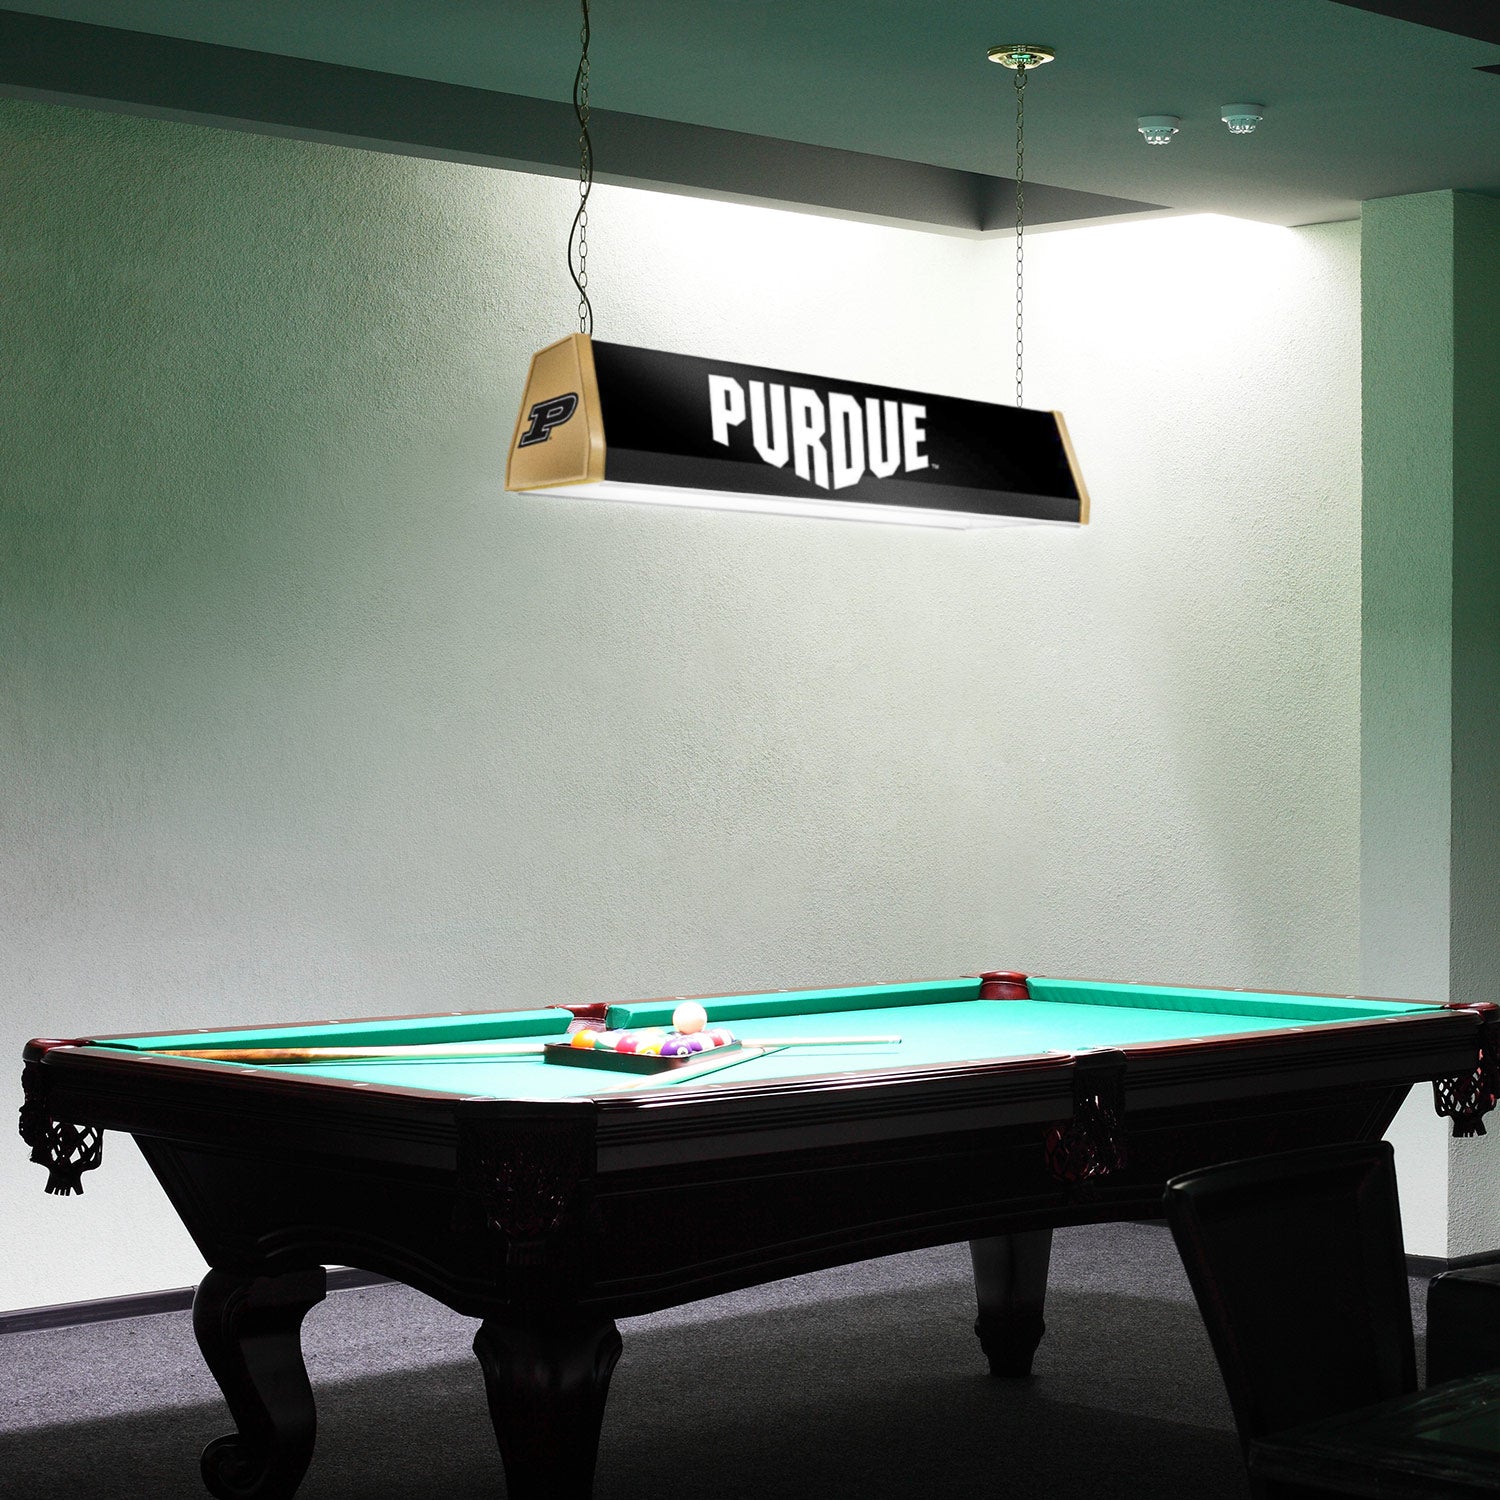 Purdue Boilermakers Standard Pool Table Light Room View